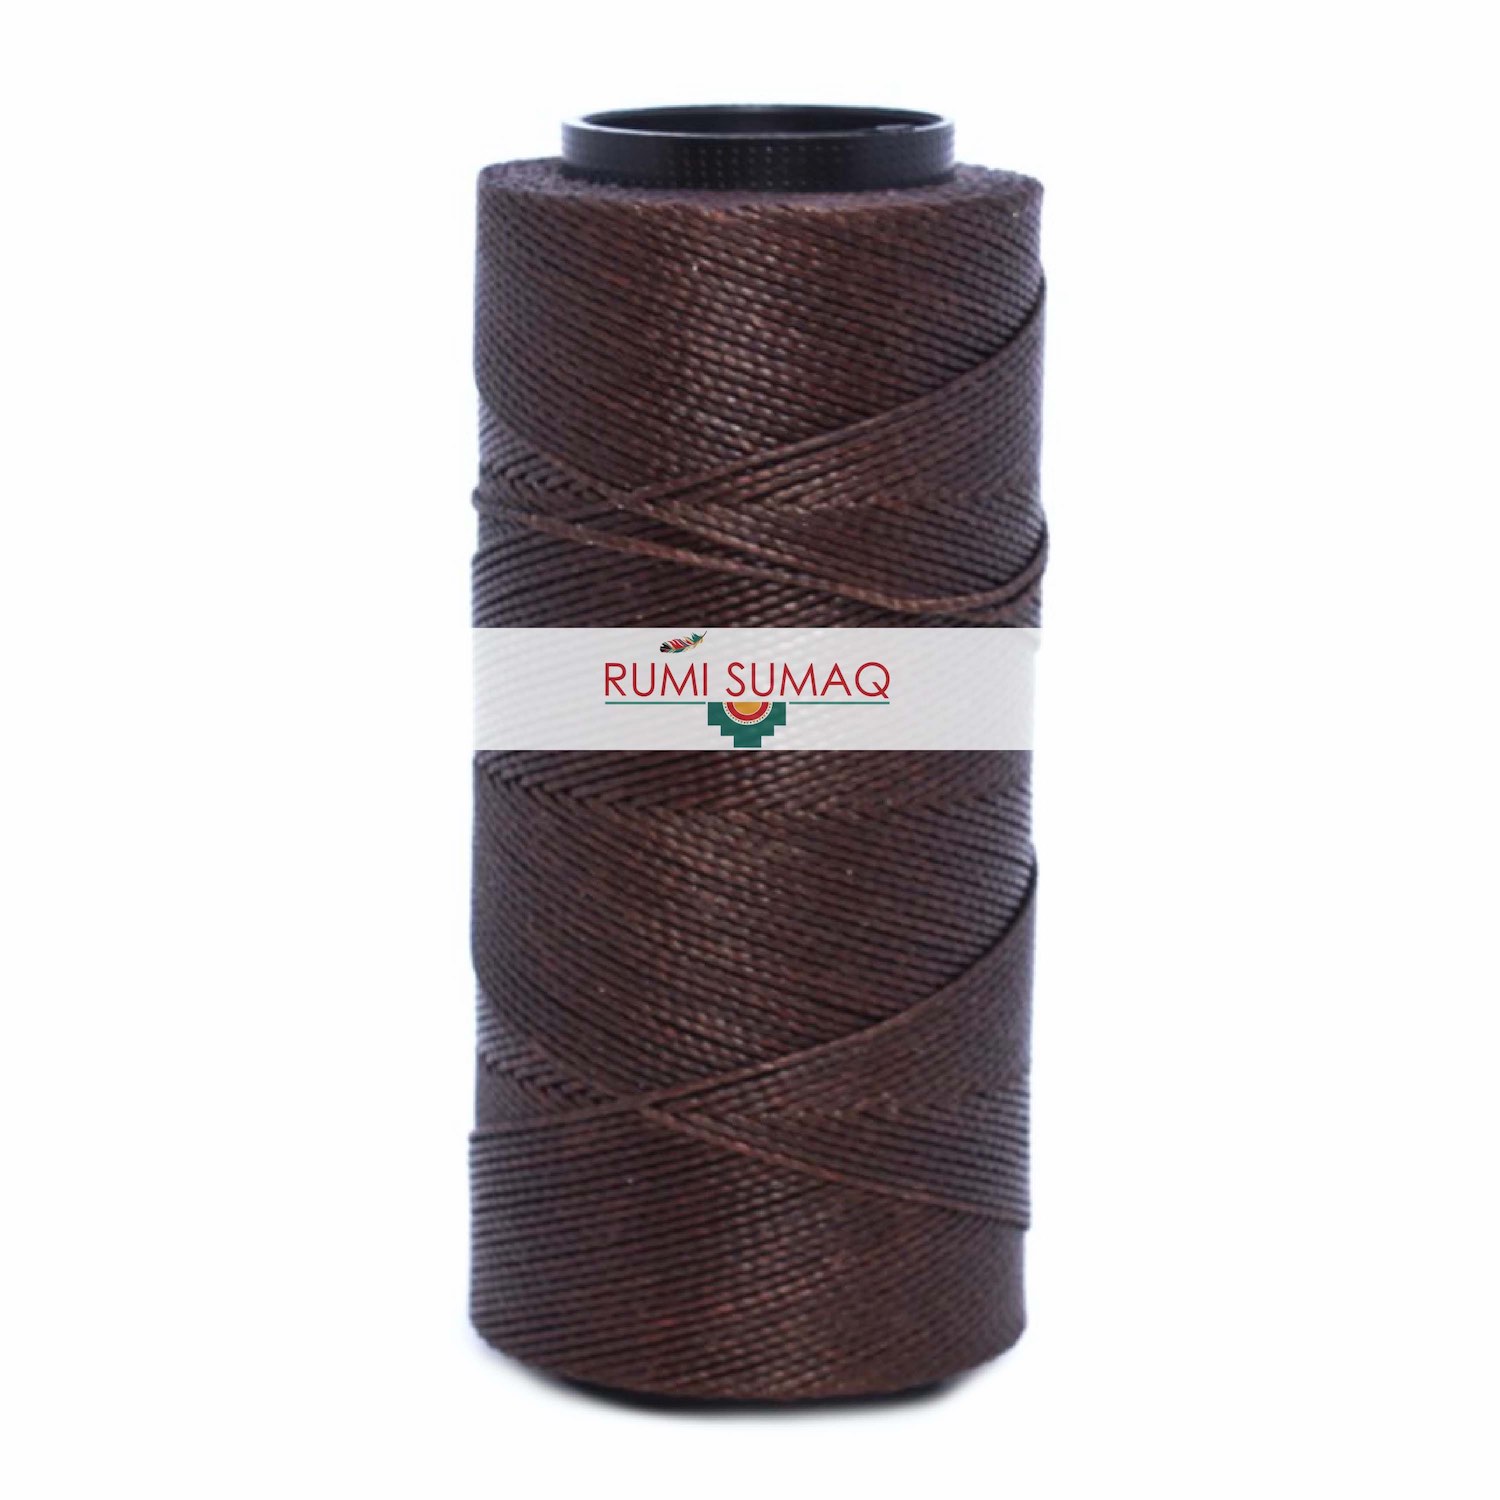 Settanyl 07-039 Brown Waxed Polyester Cord 1mm Dark Roast | Rumi Sumaq Setta Encerada